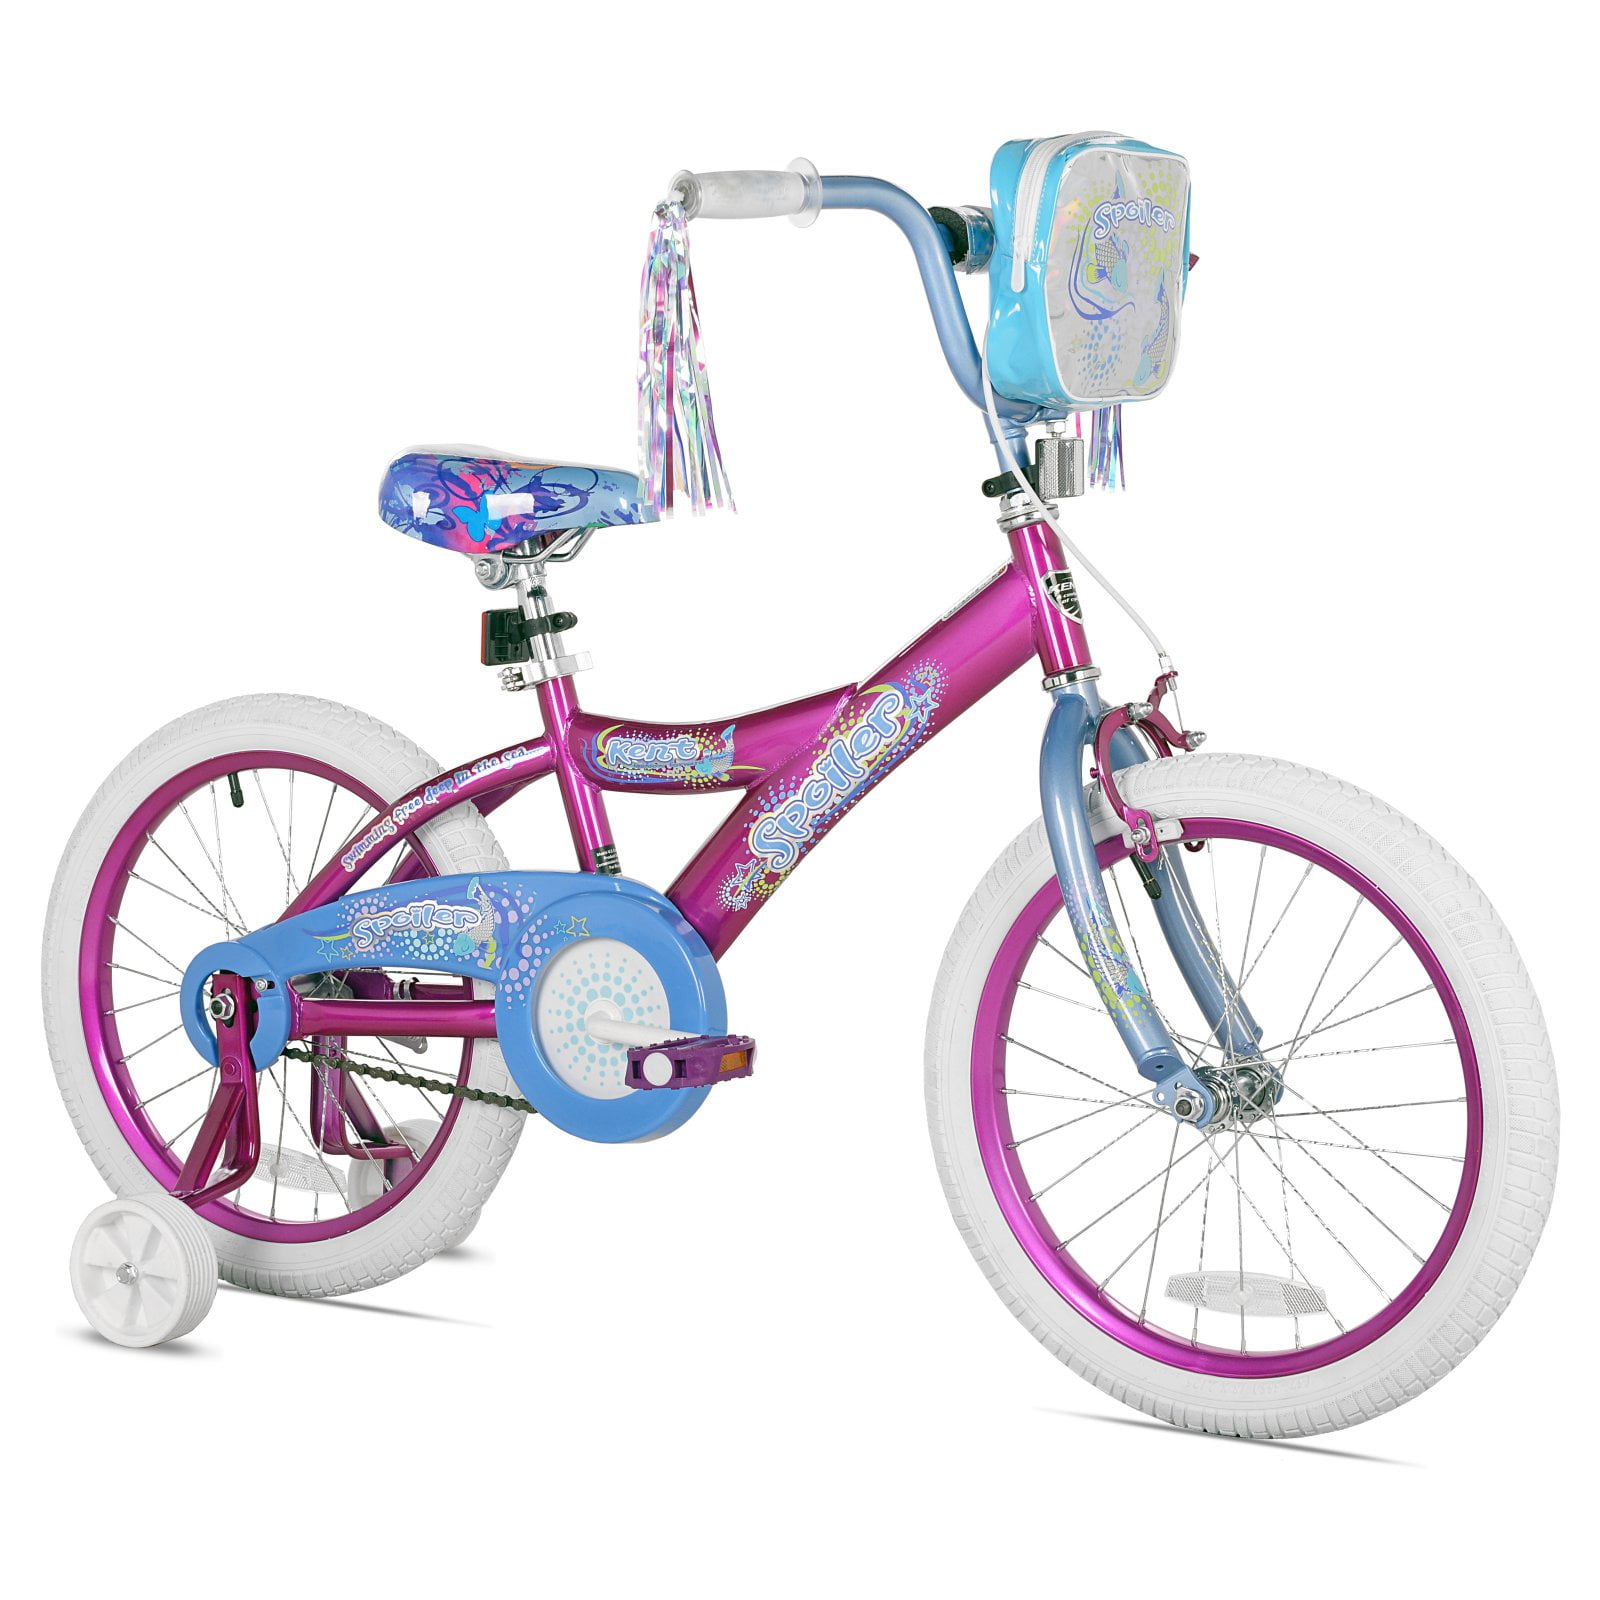 Bikes for Girls 18 Inch Kent Girl Bicycle Pink Bike Kid Child Gift 6 Year Old 